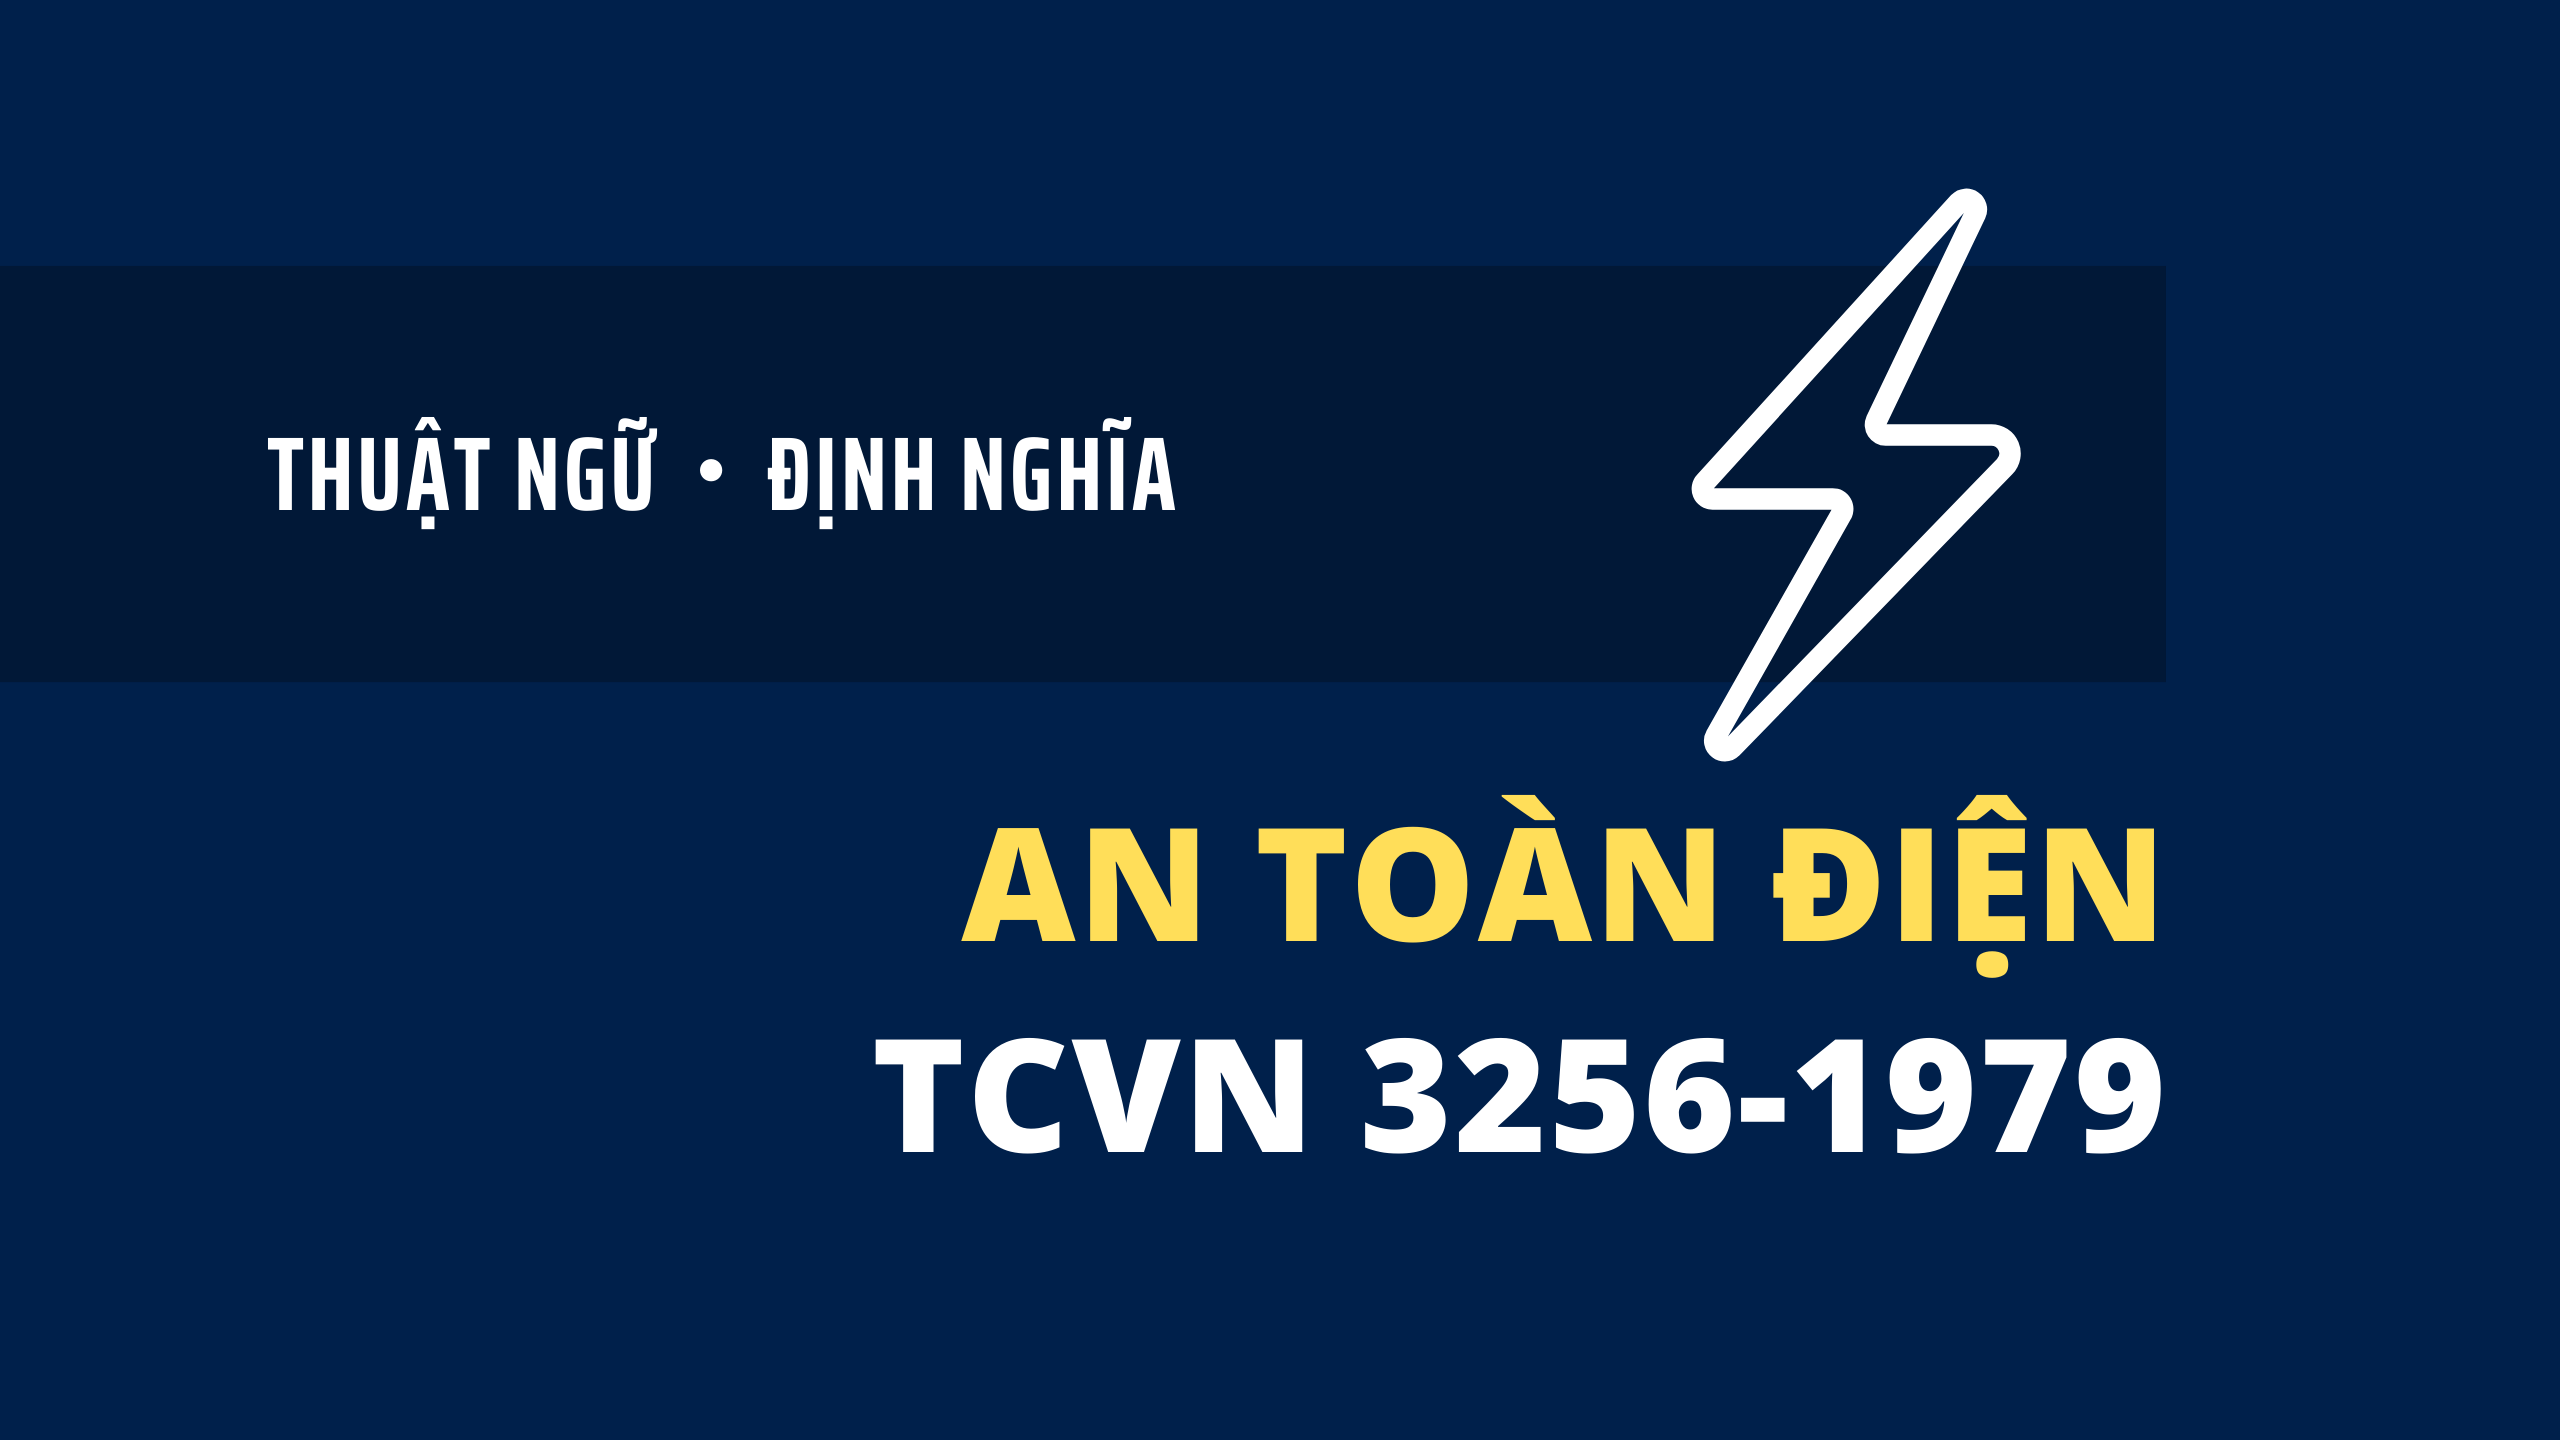 Tieu-chua-viet-nam-TCVN-3256-1979-an-toan-dien-thuat-ngu-va-dinh-nghia